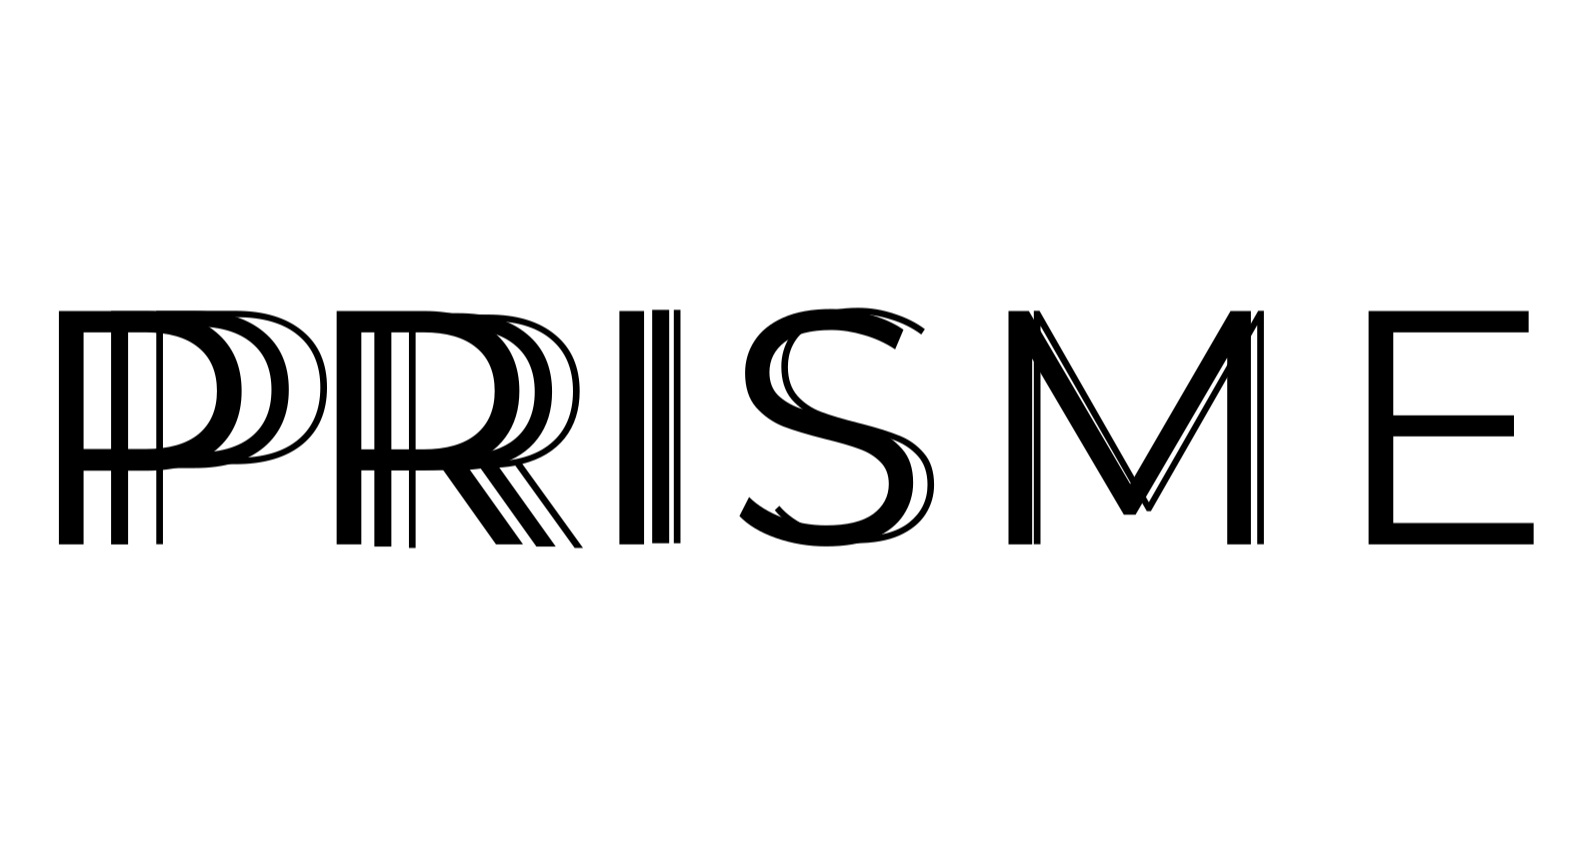 logo Prisme